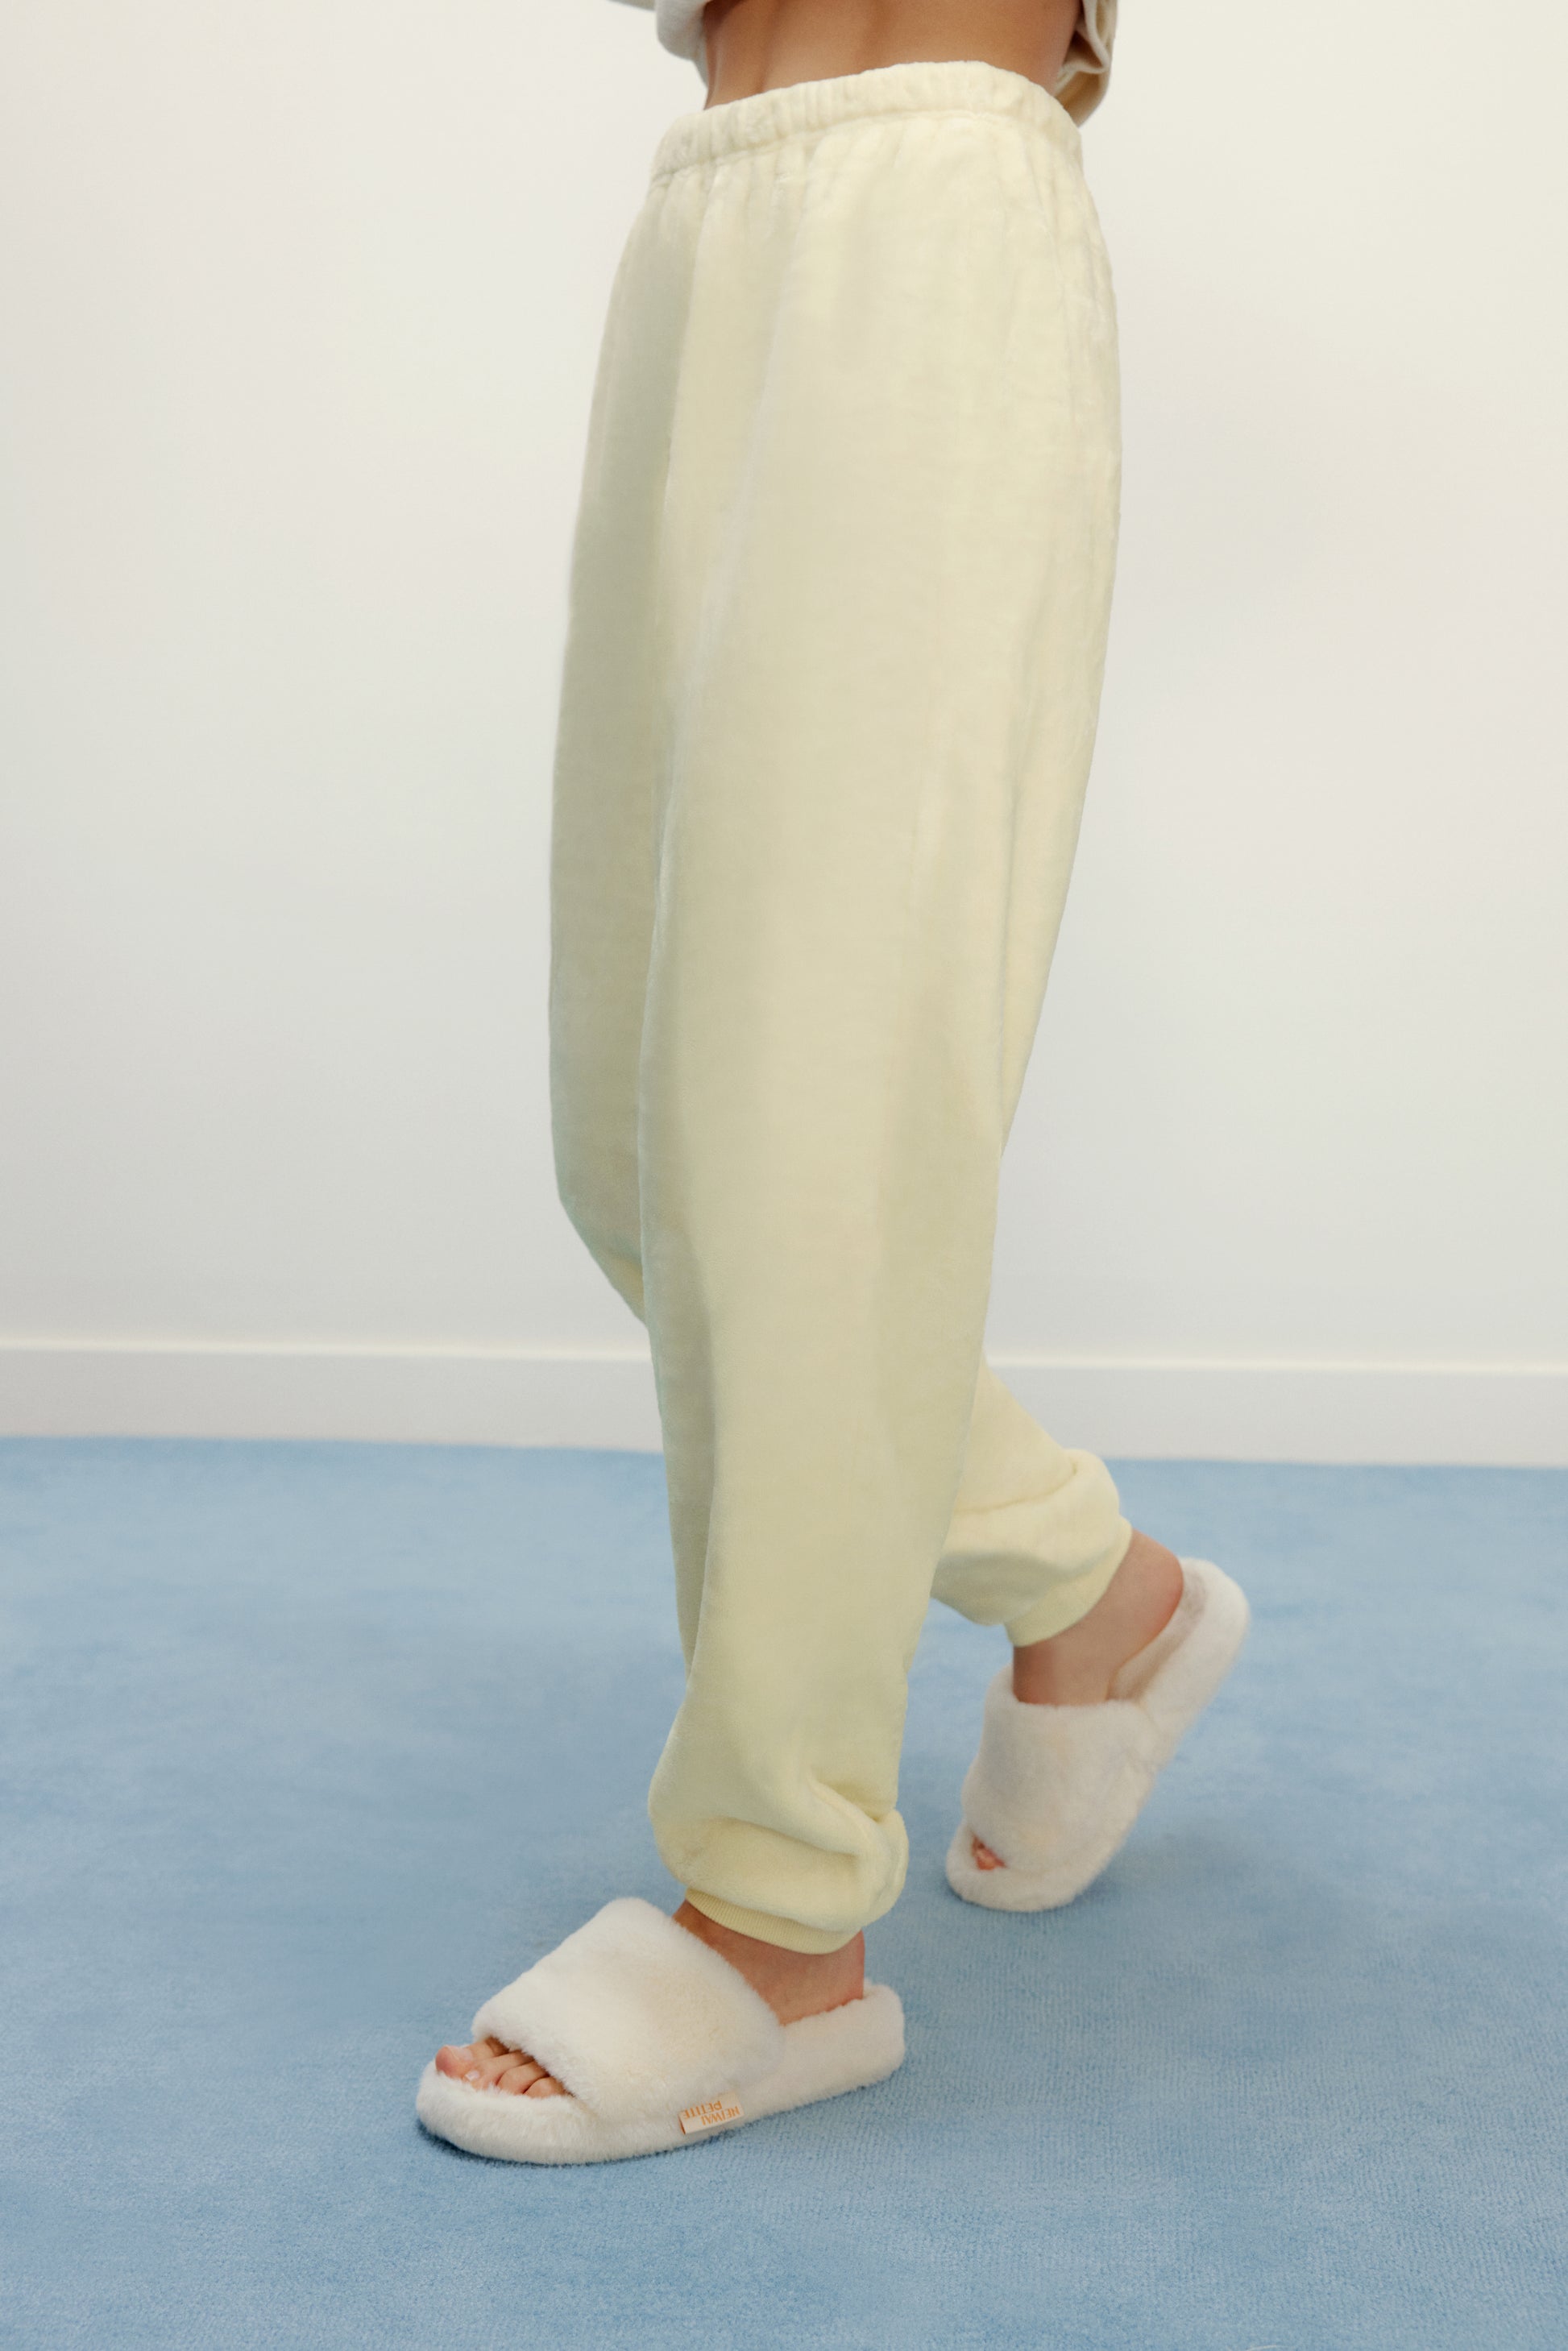 Women's Plush Fuzzy Pajama Pants Soft Warm Winter Cozy Pj Bottoms